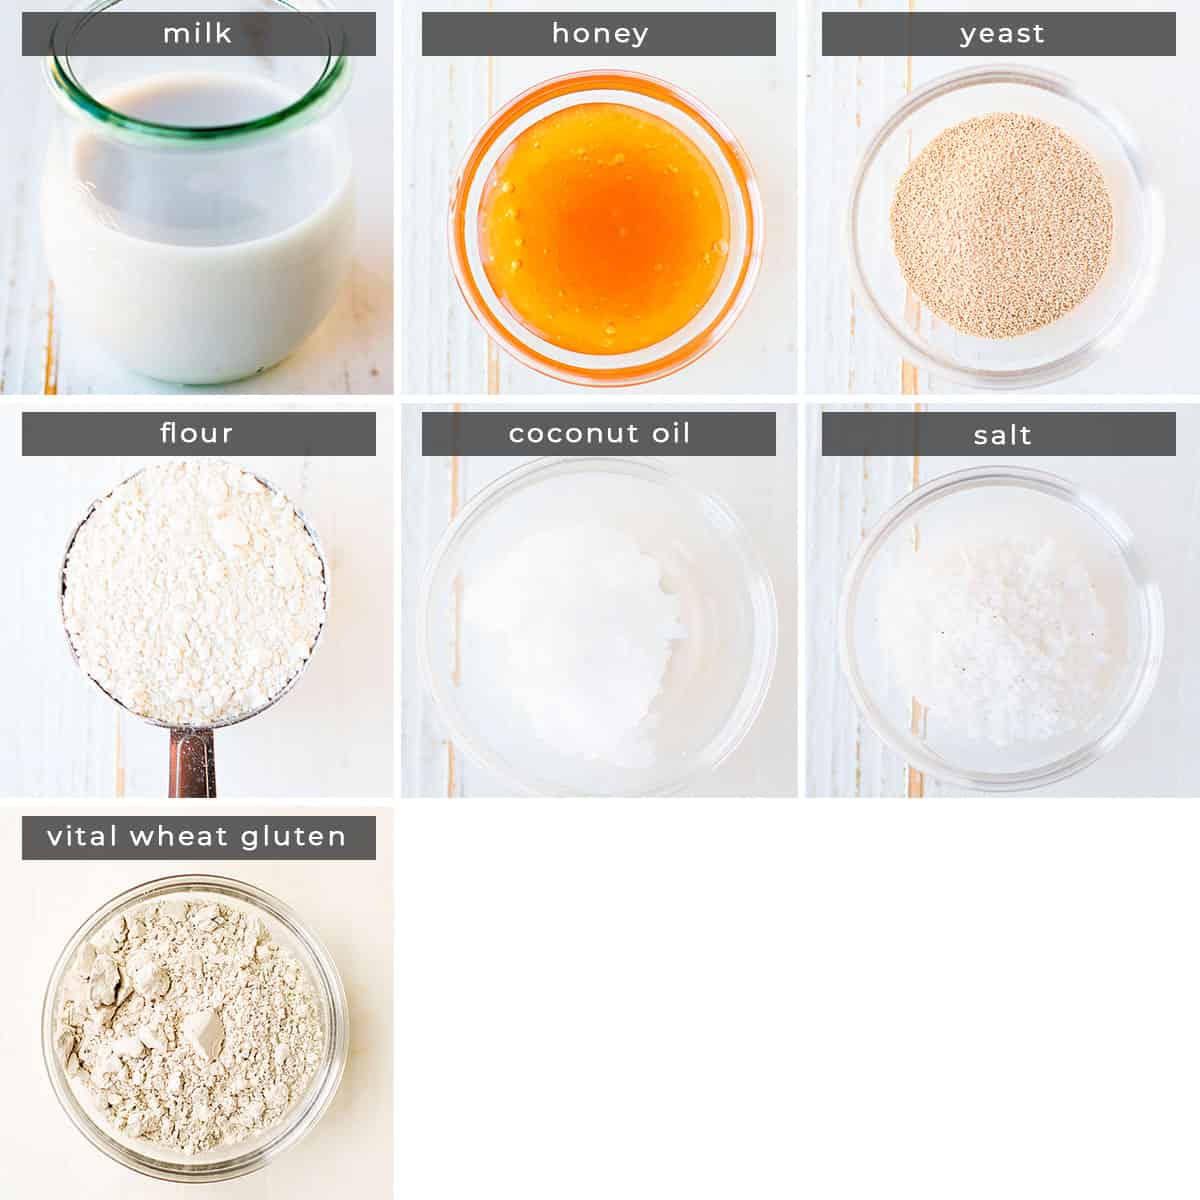 Image showing recipe ingredients milk, honey, yeast, flour, coconut oil, salt, and vital wheat gluten.